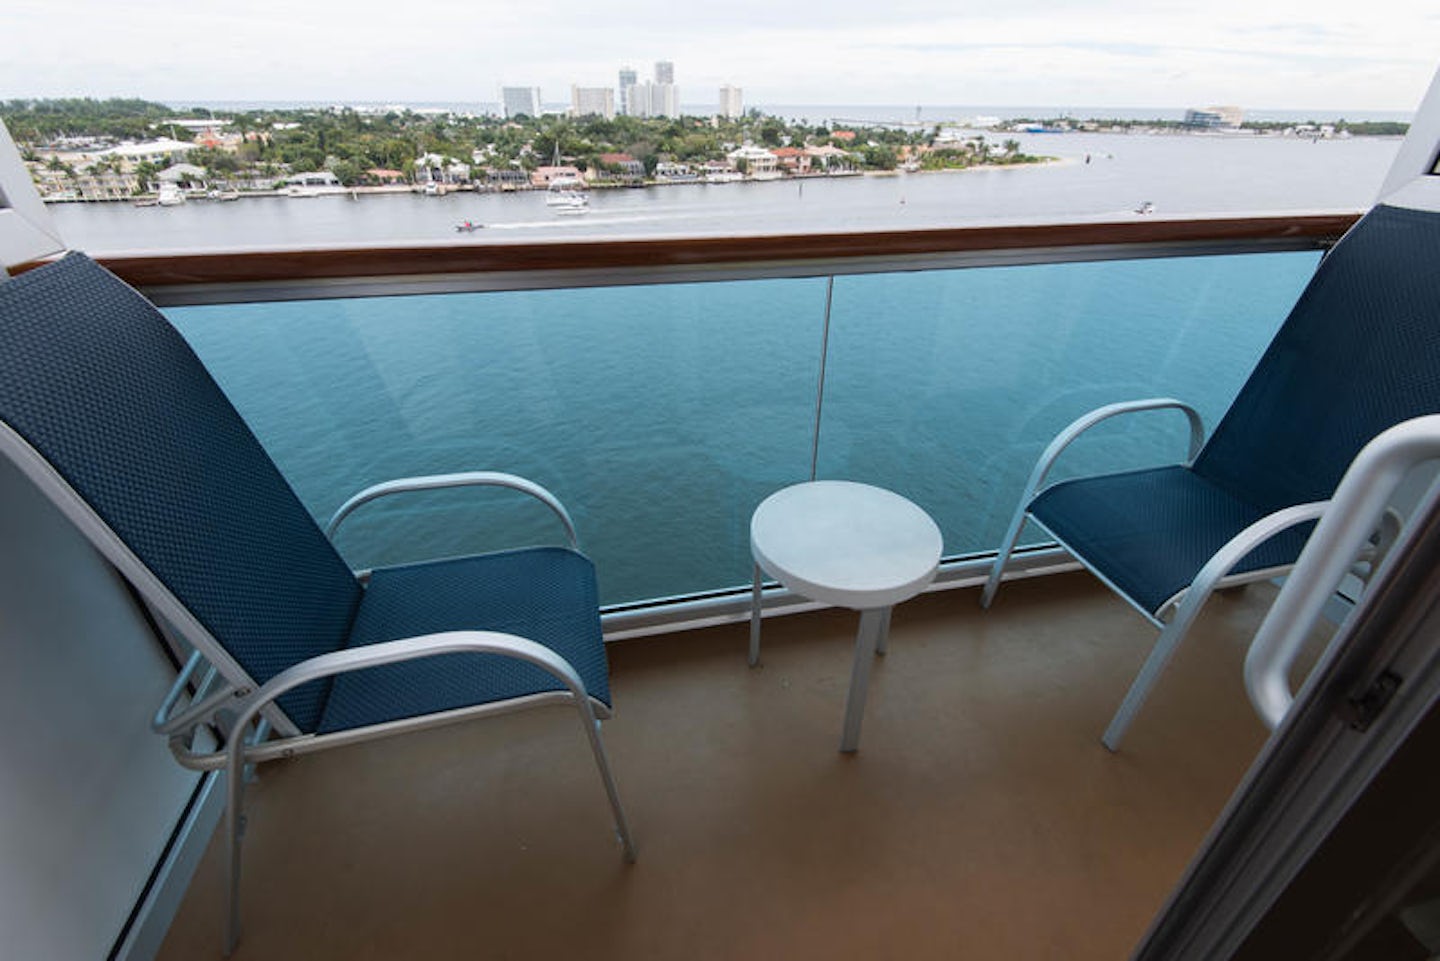 cruise ship balcony room price